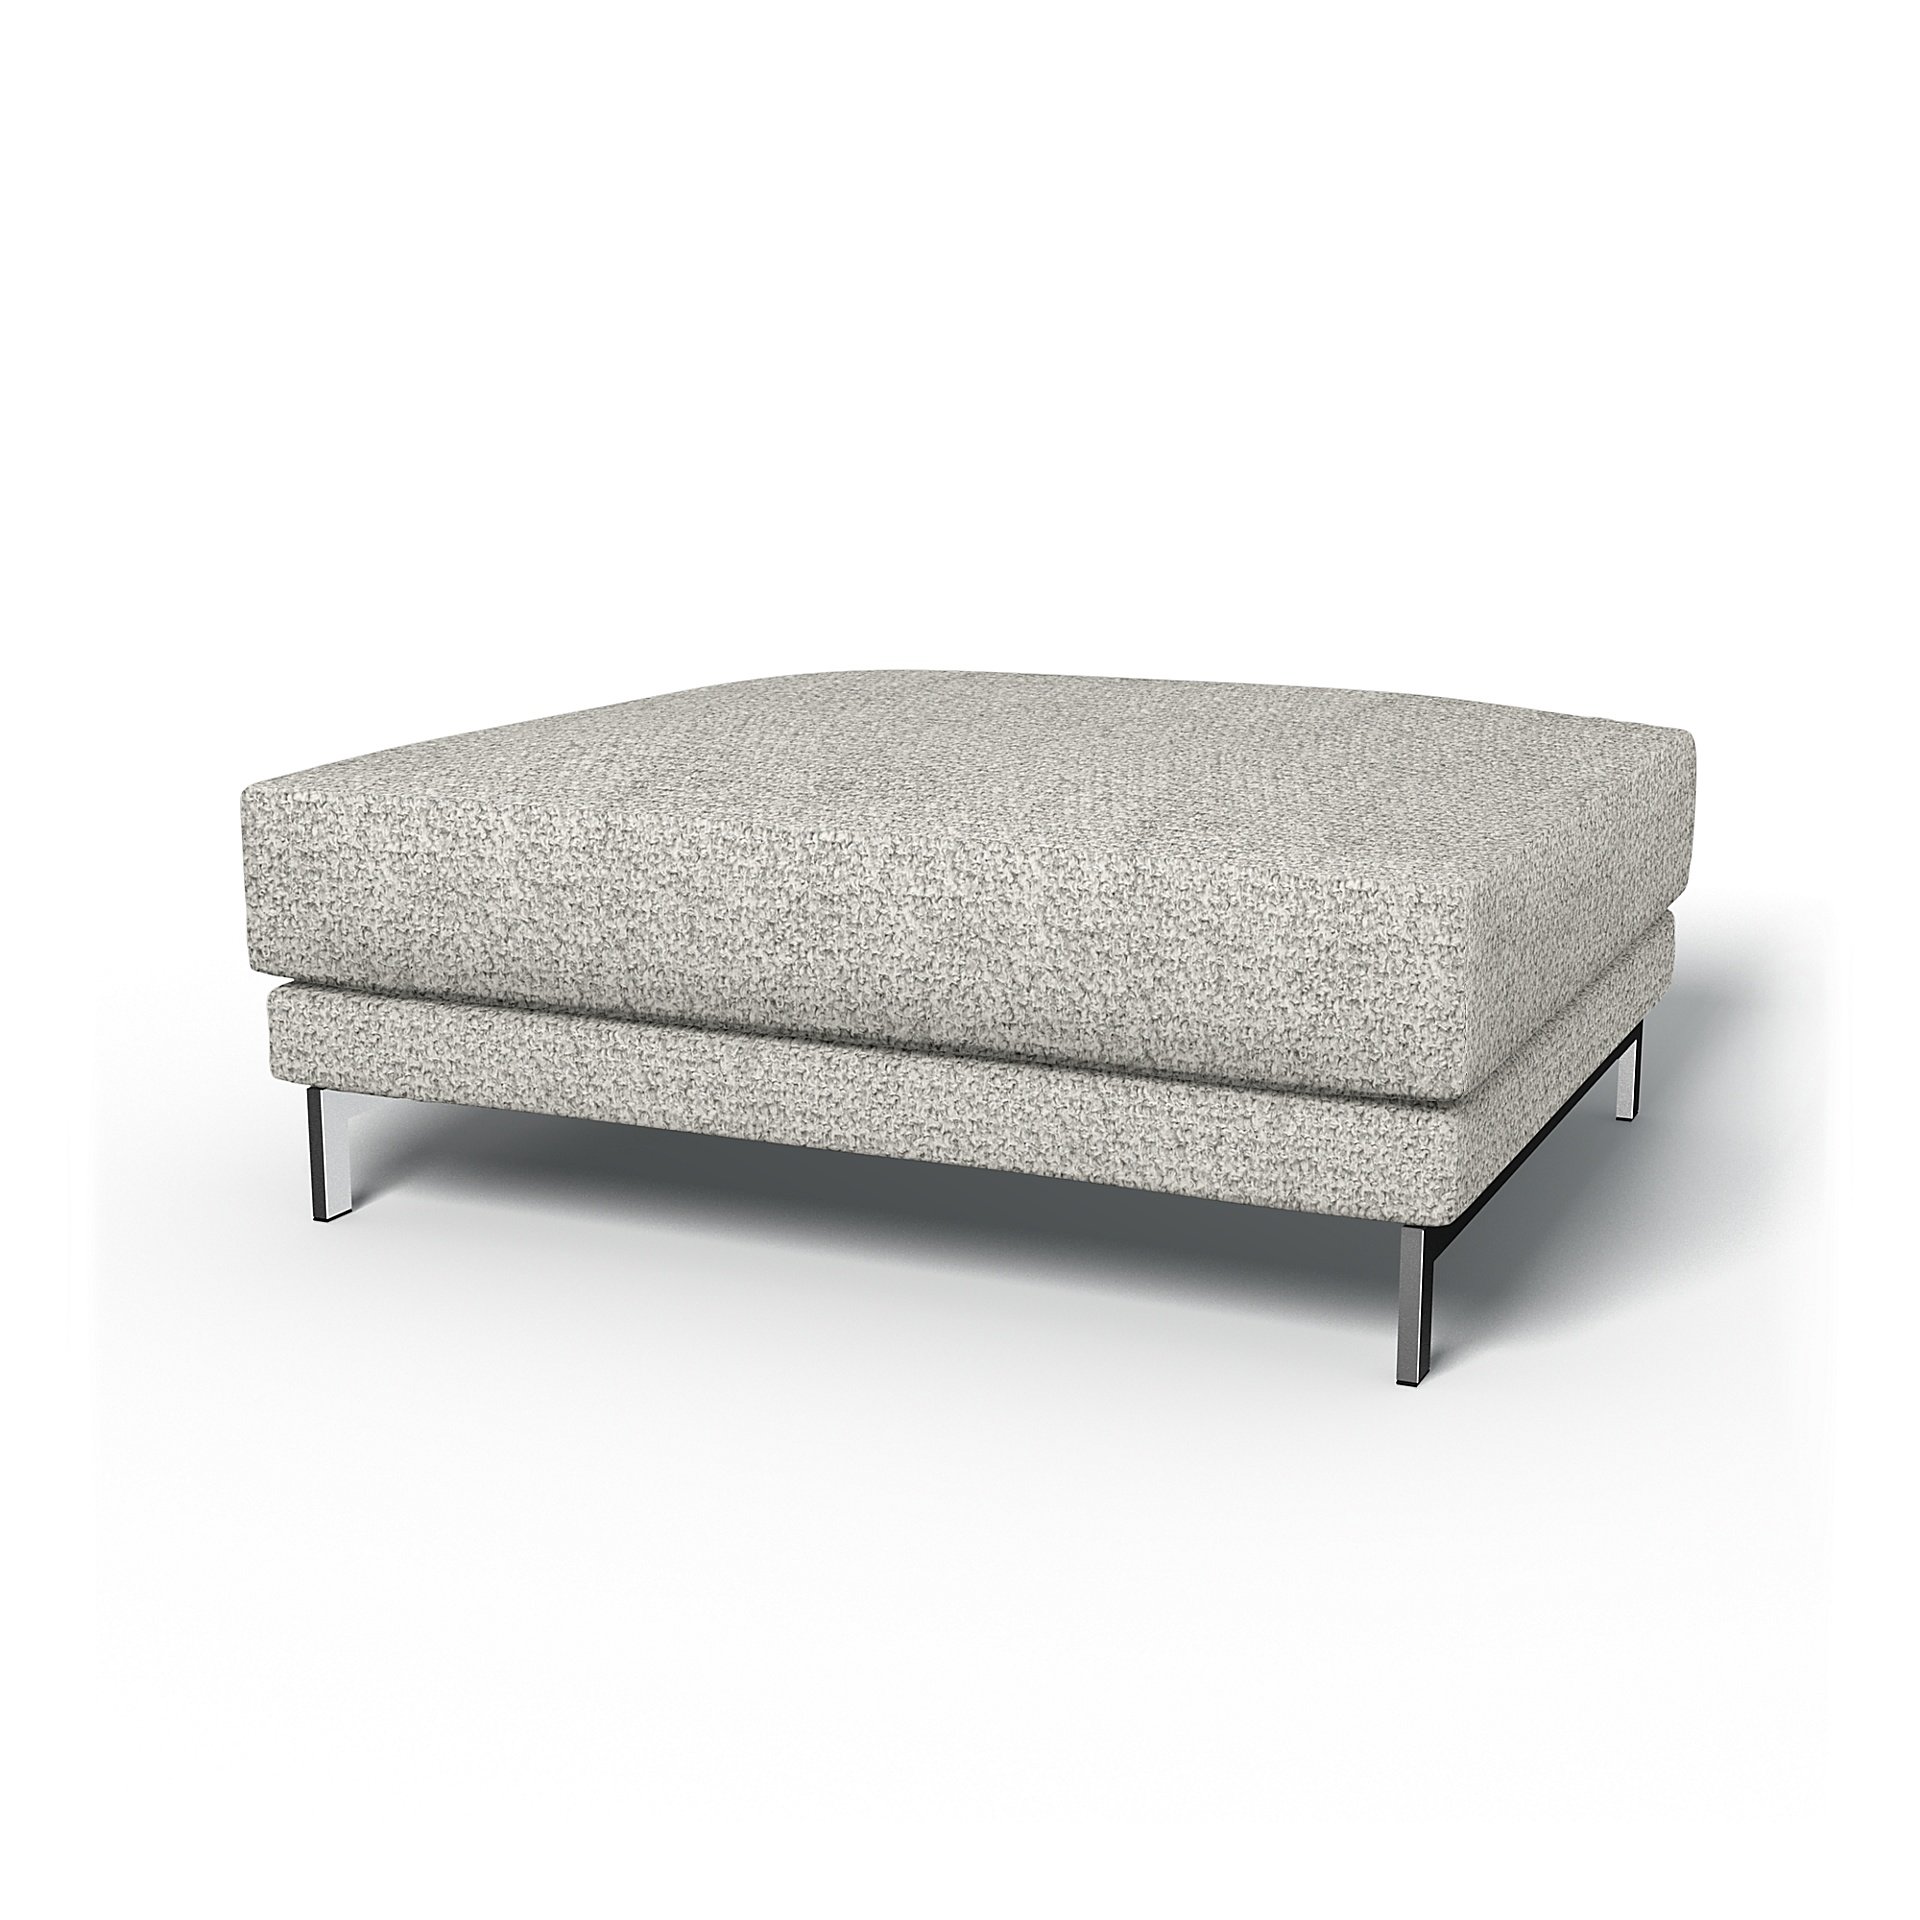 IKEA - Nockeby Footstool Cover, Driftwood, Boucle & Texture - Bemz